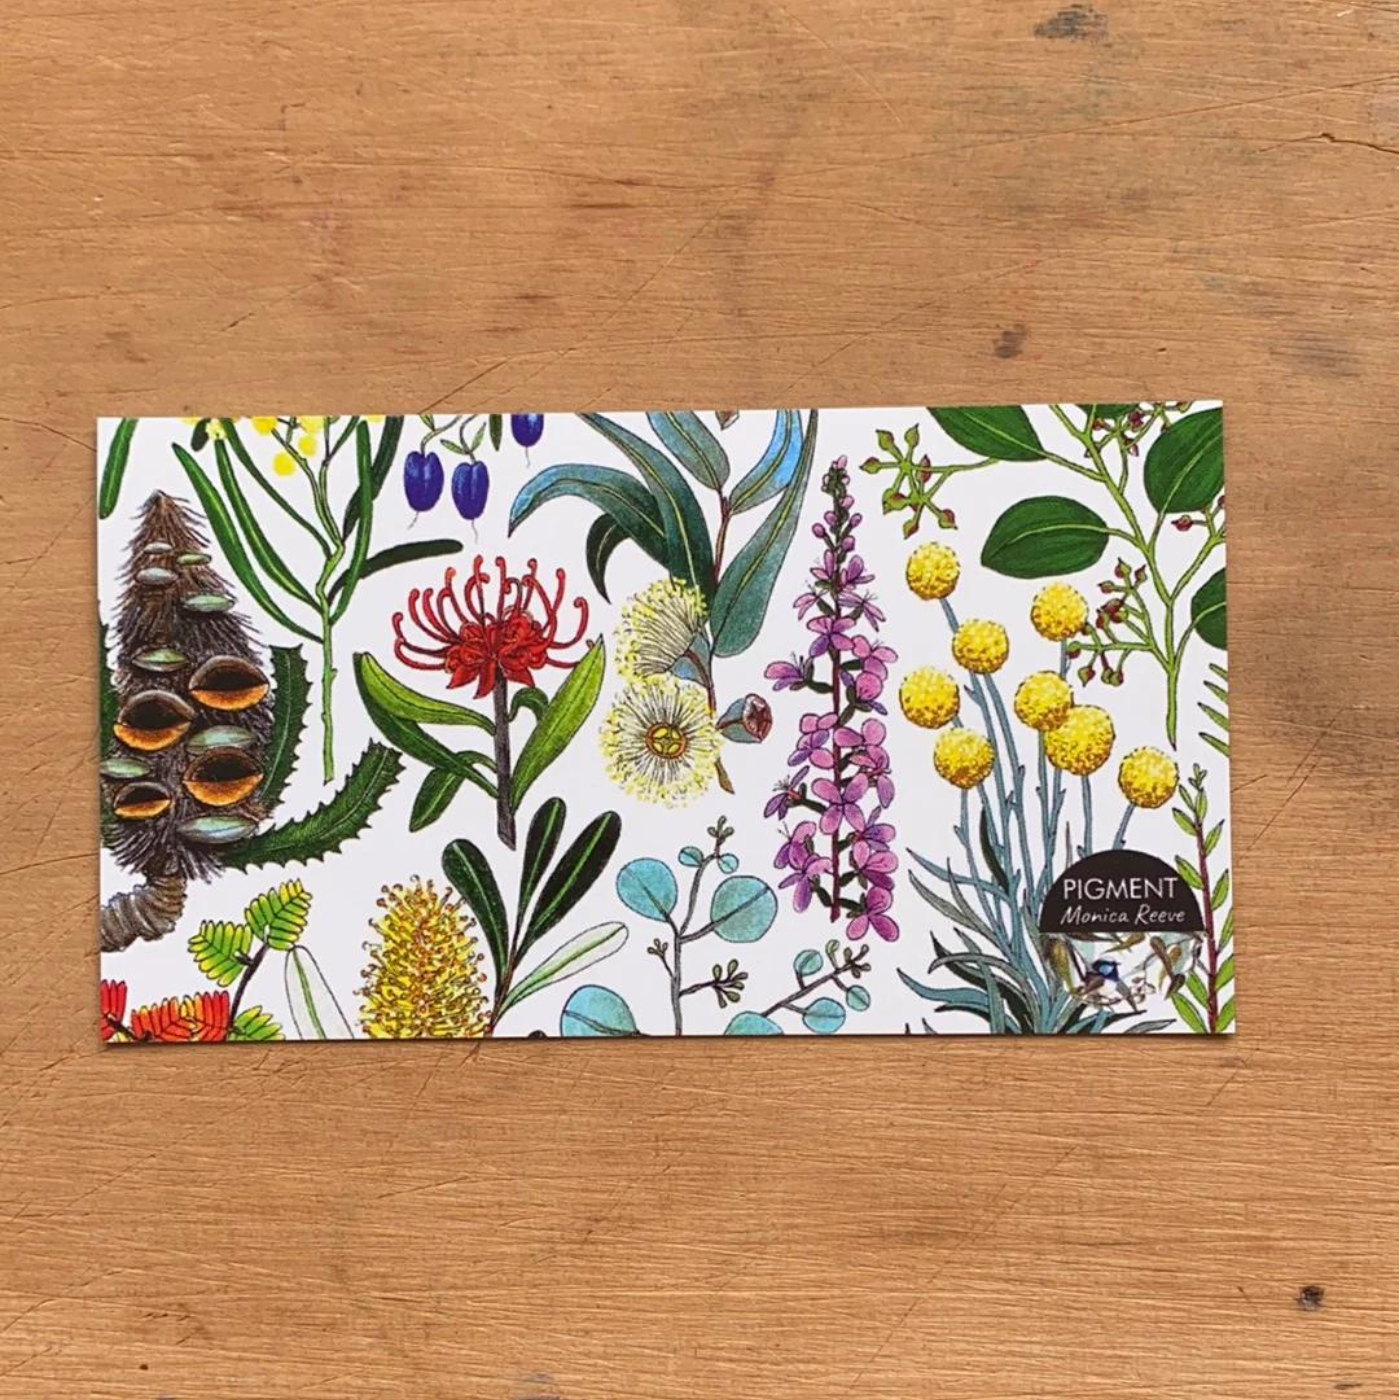 PIGMENT Monica Reeve - Magnet - Tasmanian Wildflowers